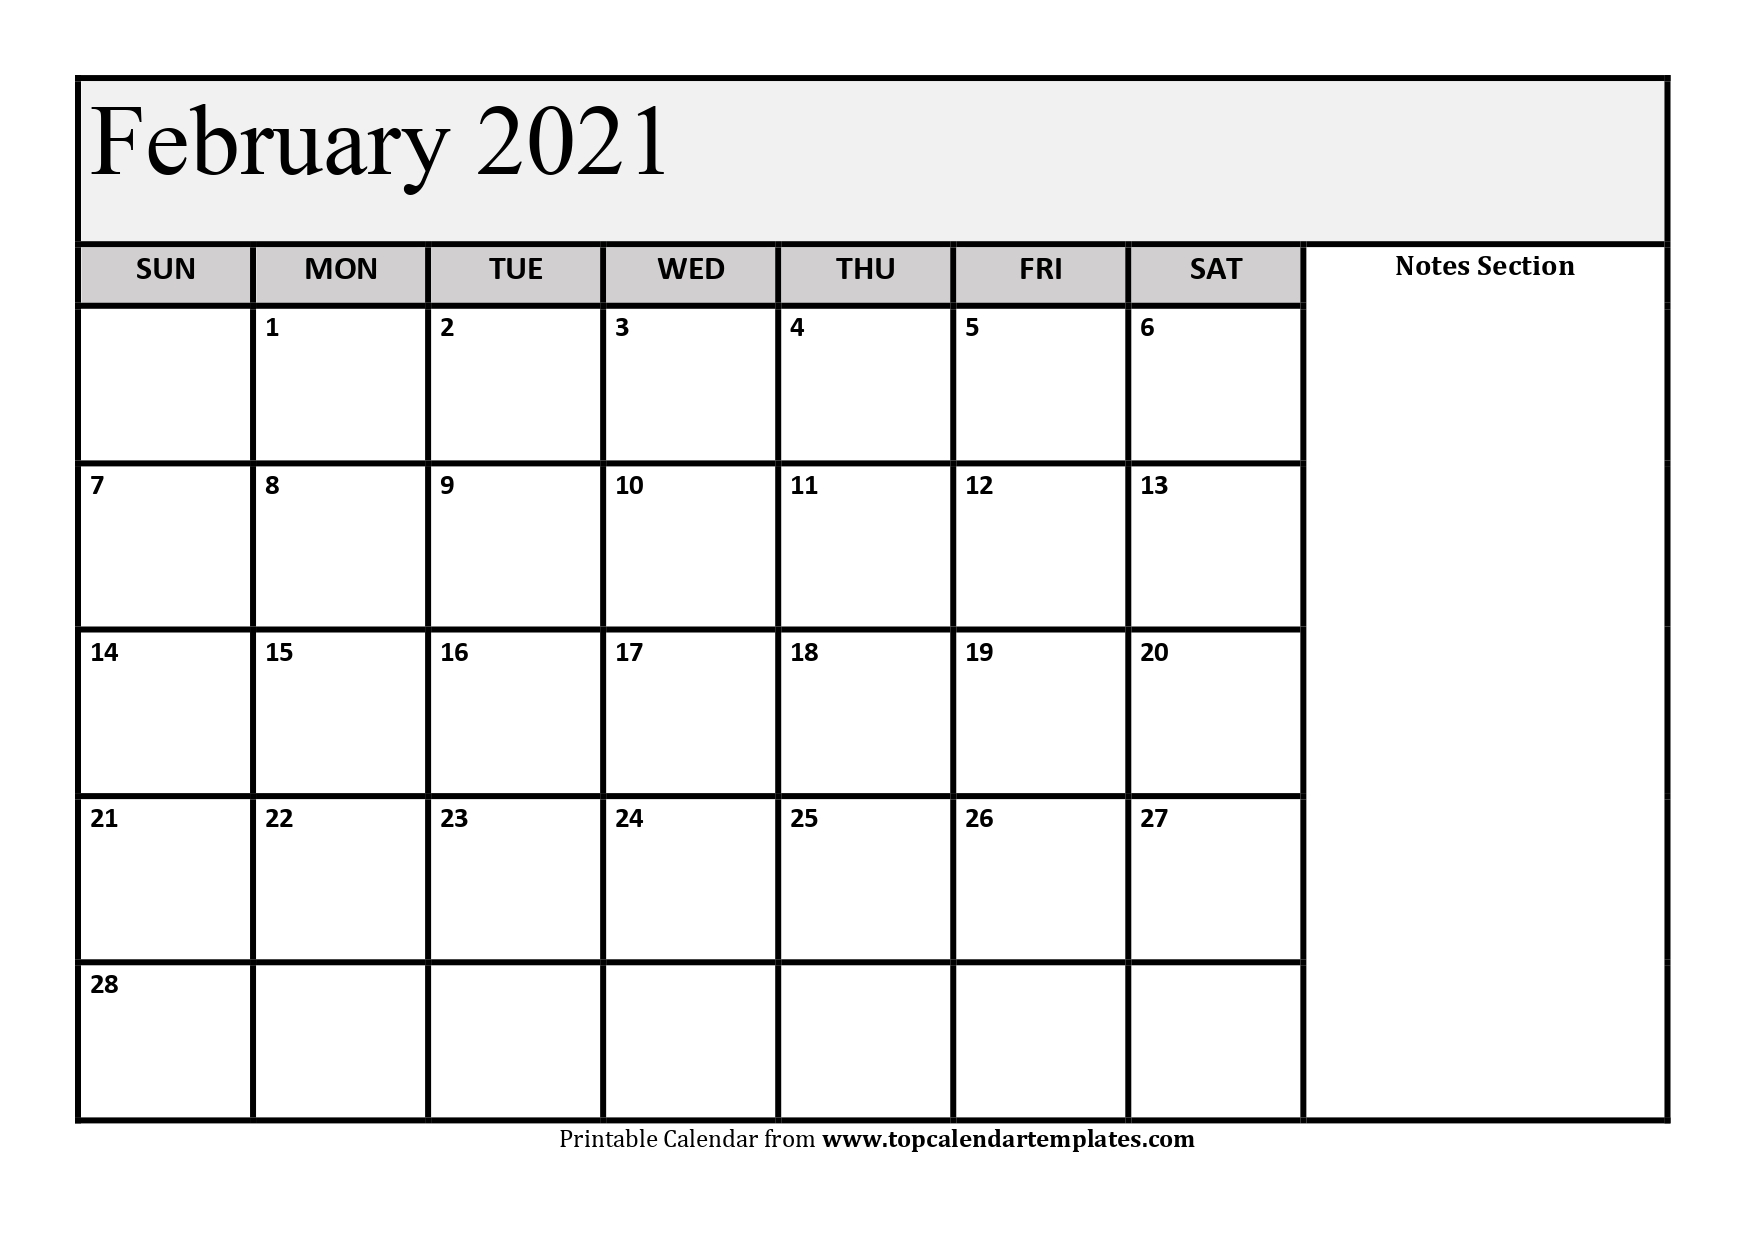 February 2021 Printable Calendar In Editable Format